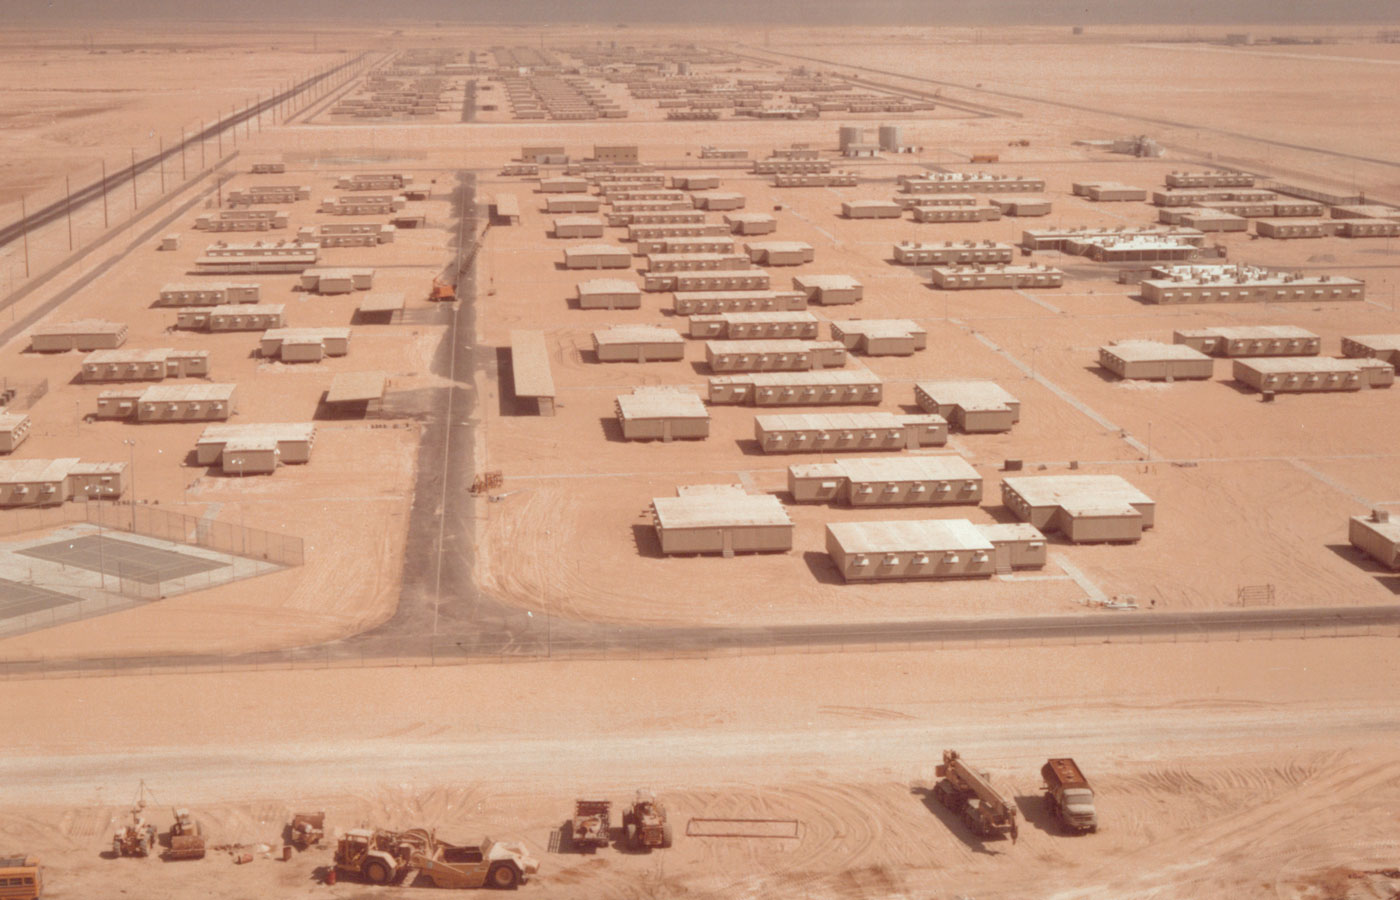 Suadi Arabia Camp